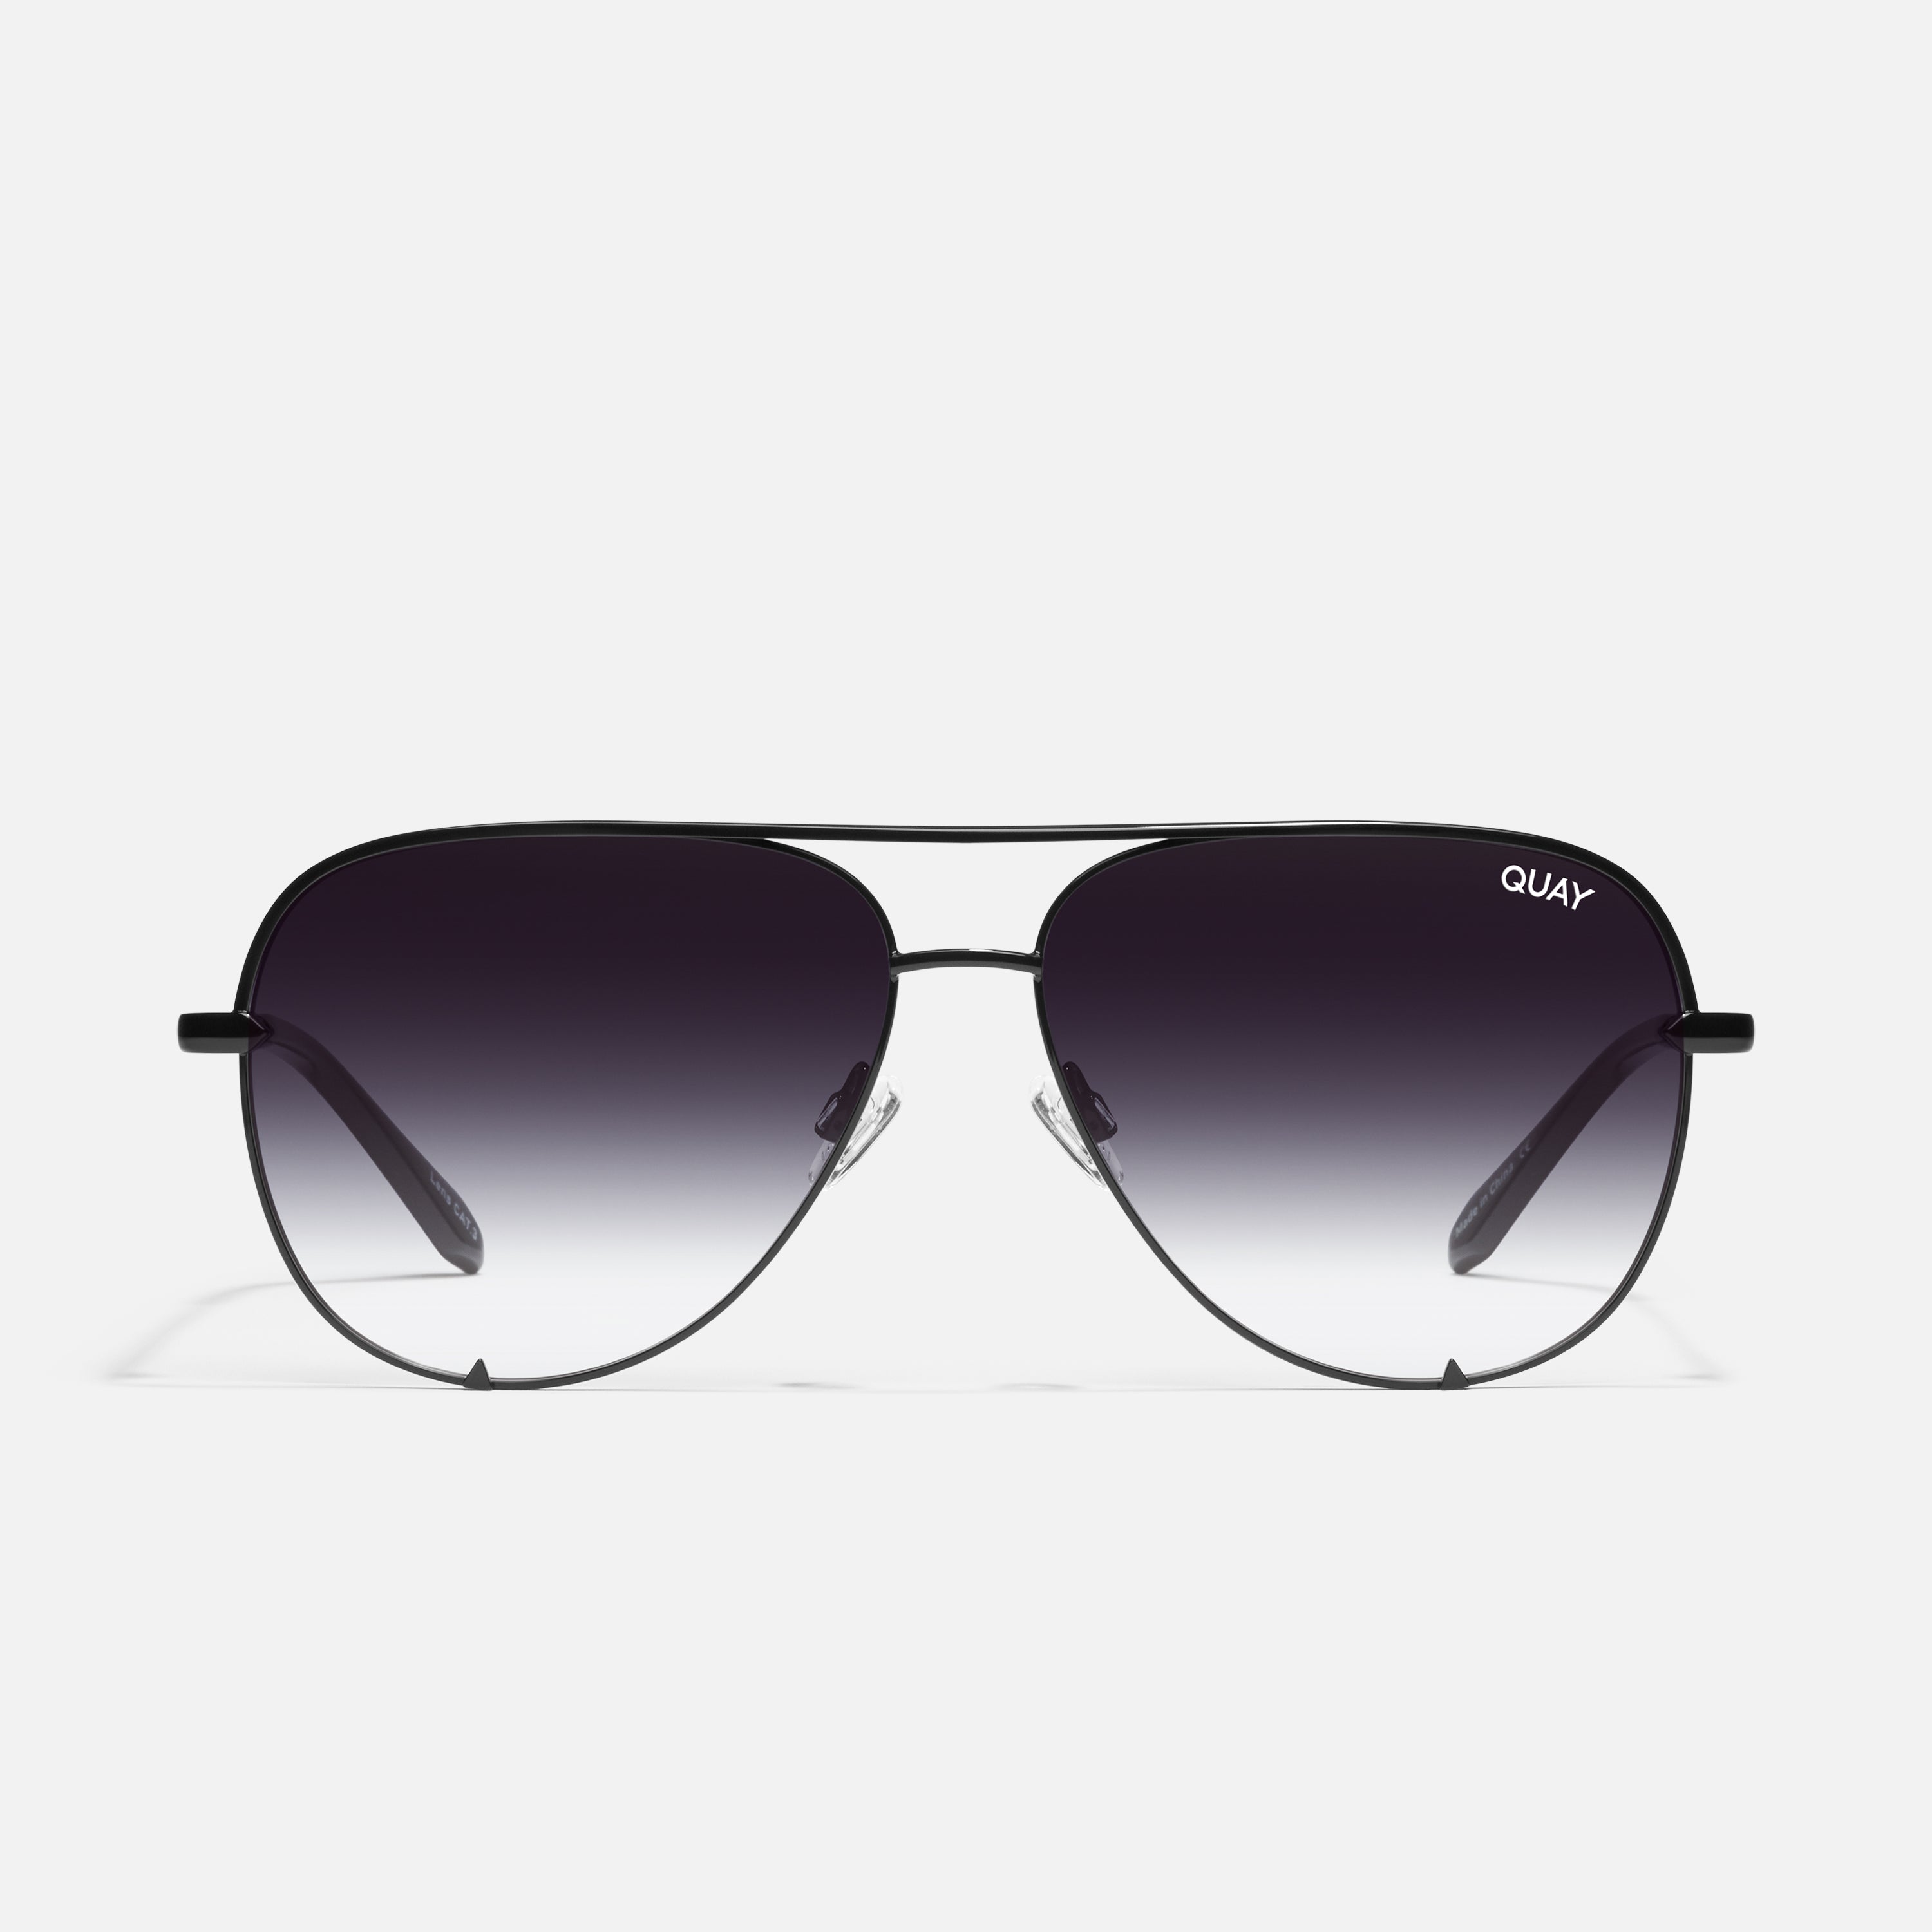 Guess Heavy Aviator Sunglasses Silver Metal Frame Gray Smoke Gradient